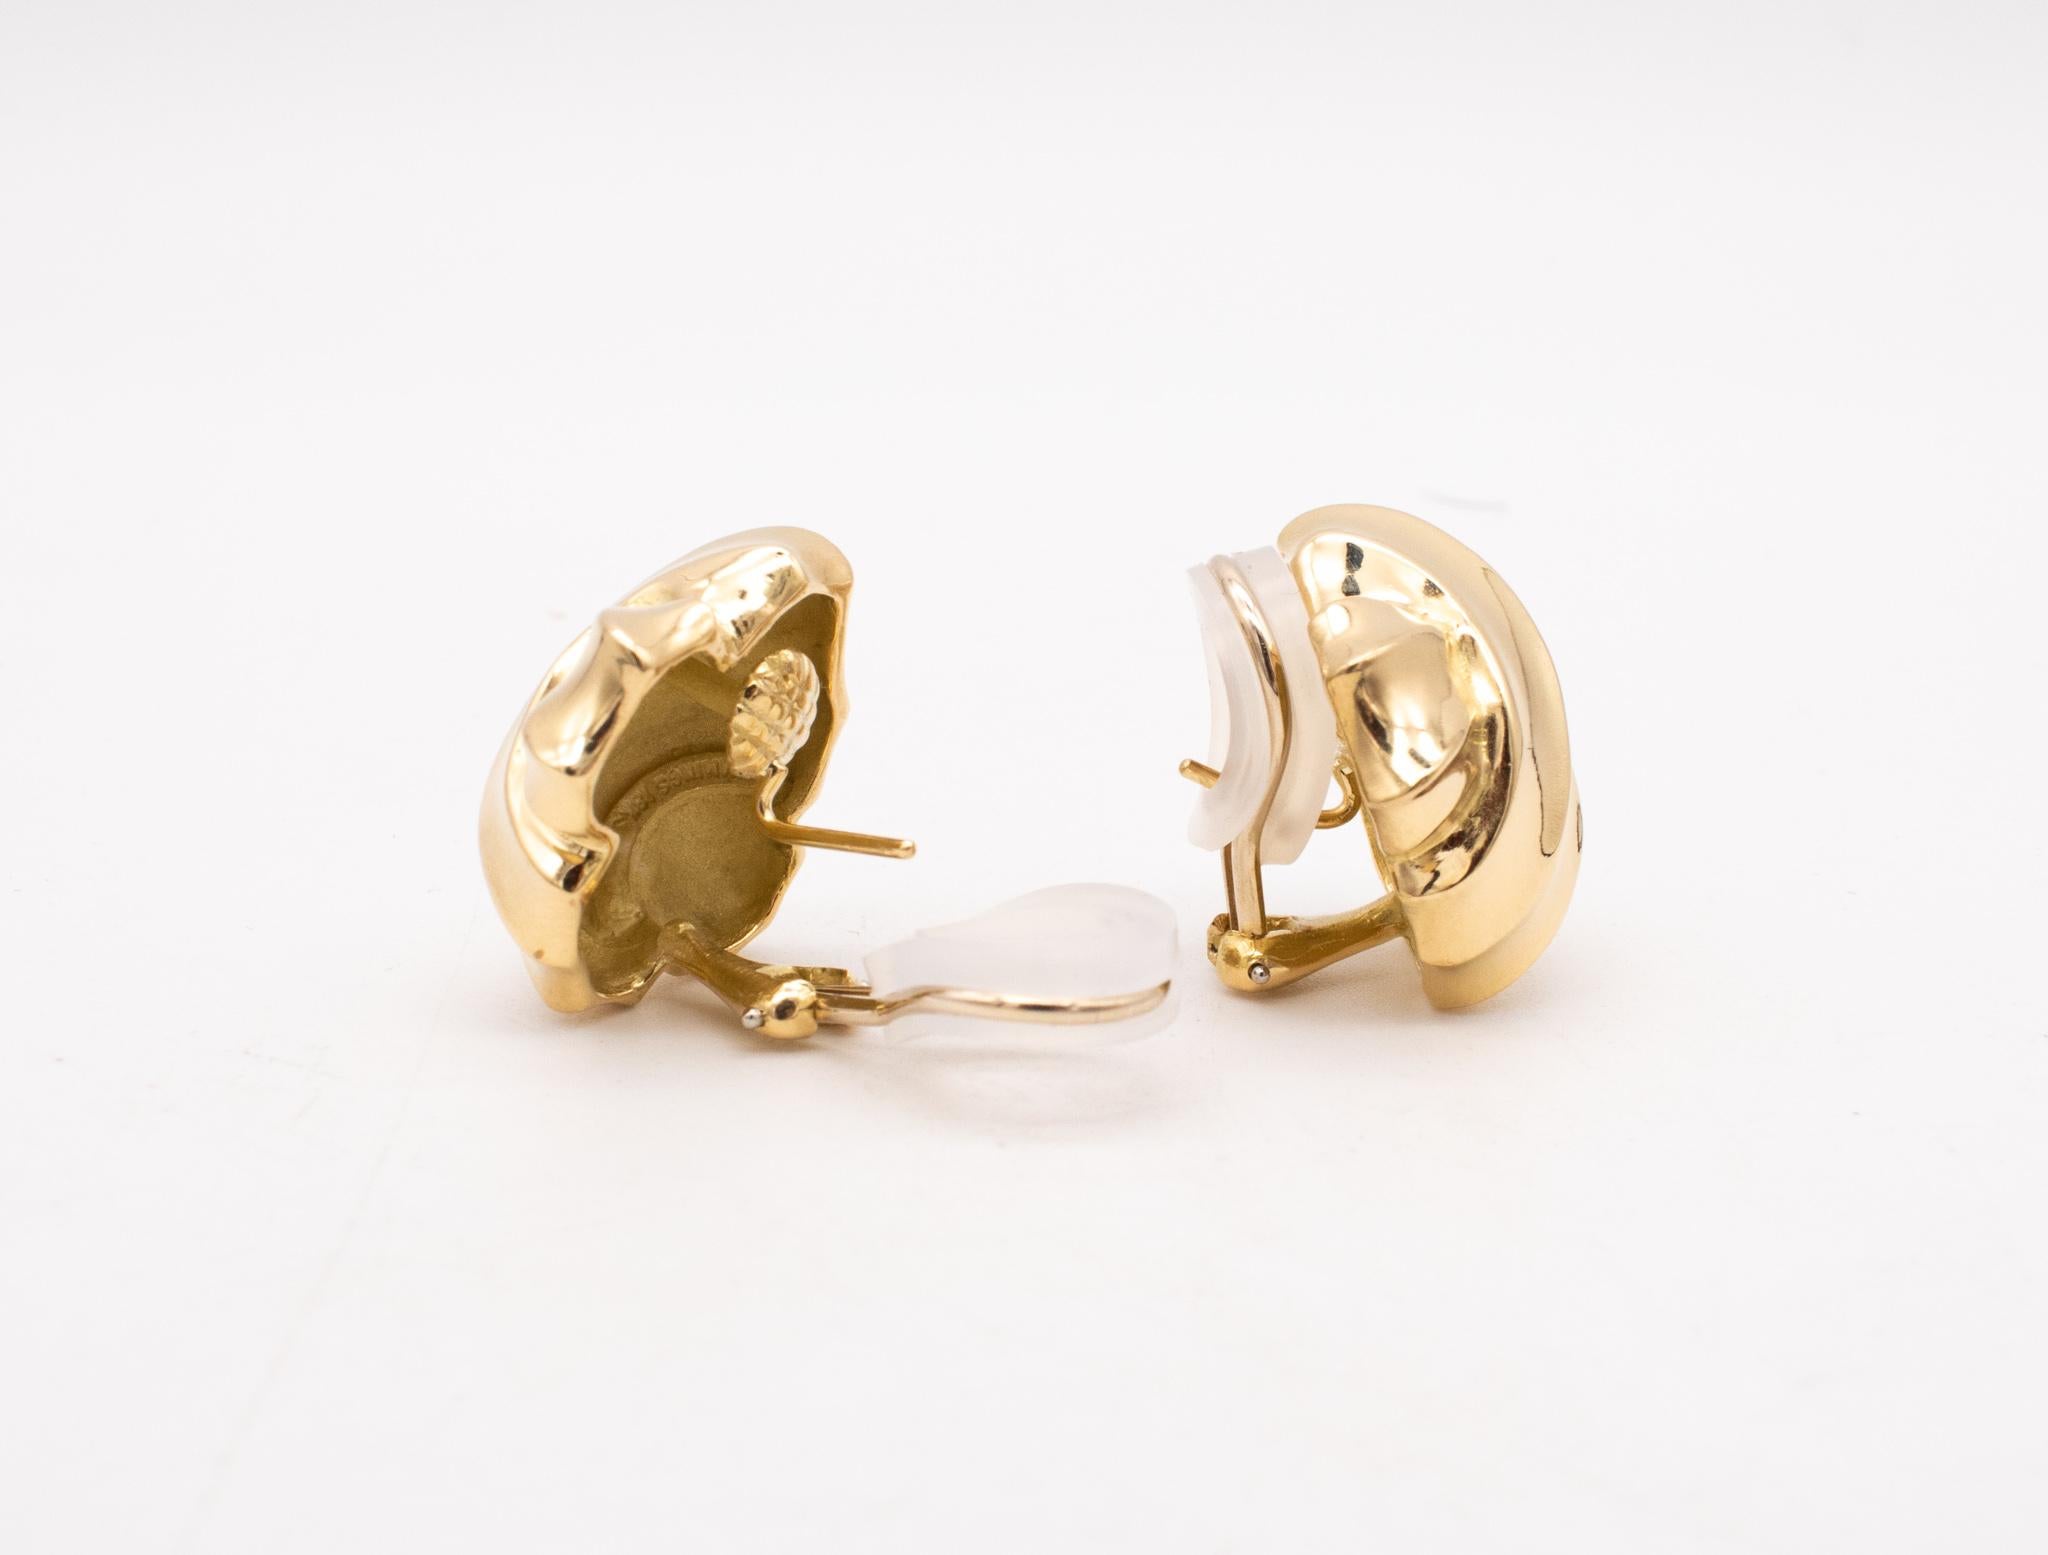 Angela Cummings 1984 Studio Rare Geometric Earrings in Solid 18Kt Yellow Gold For Sale 1